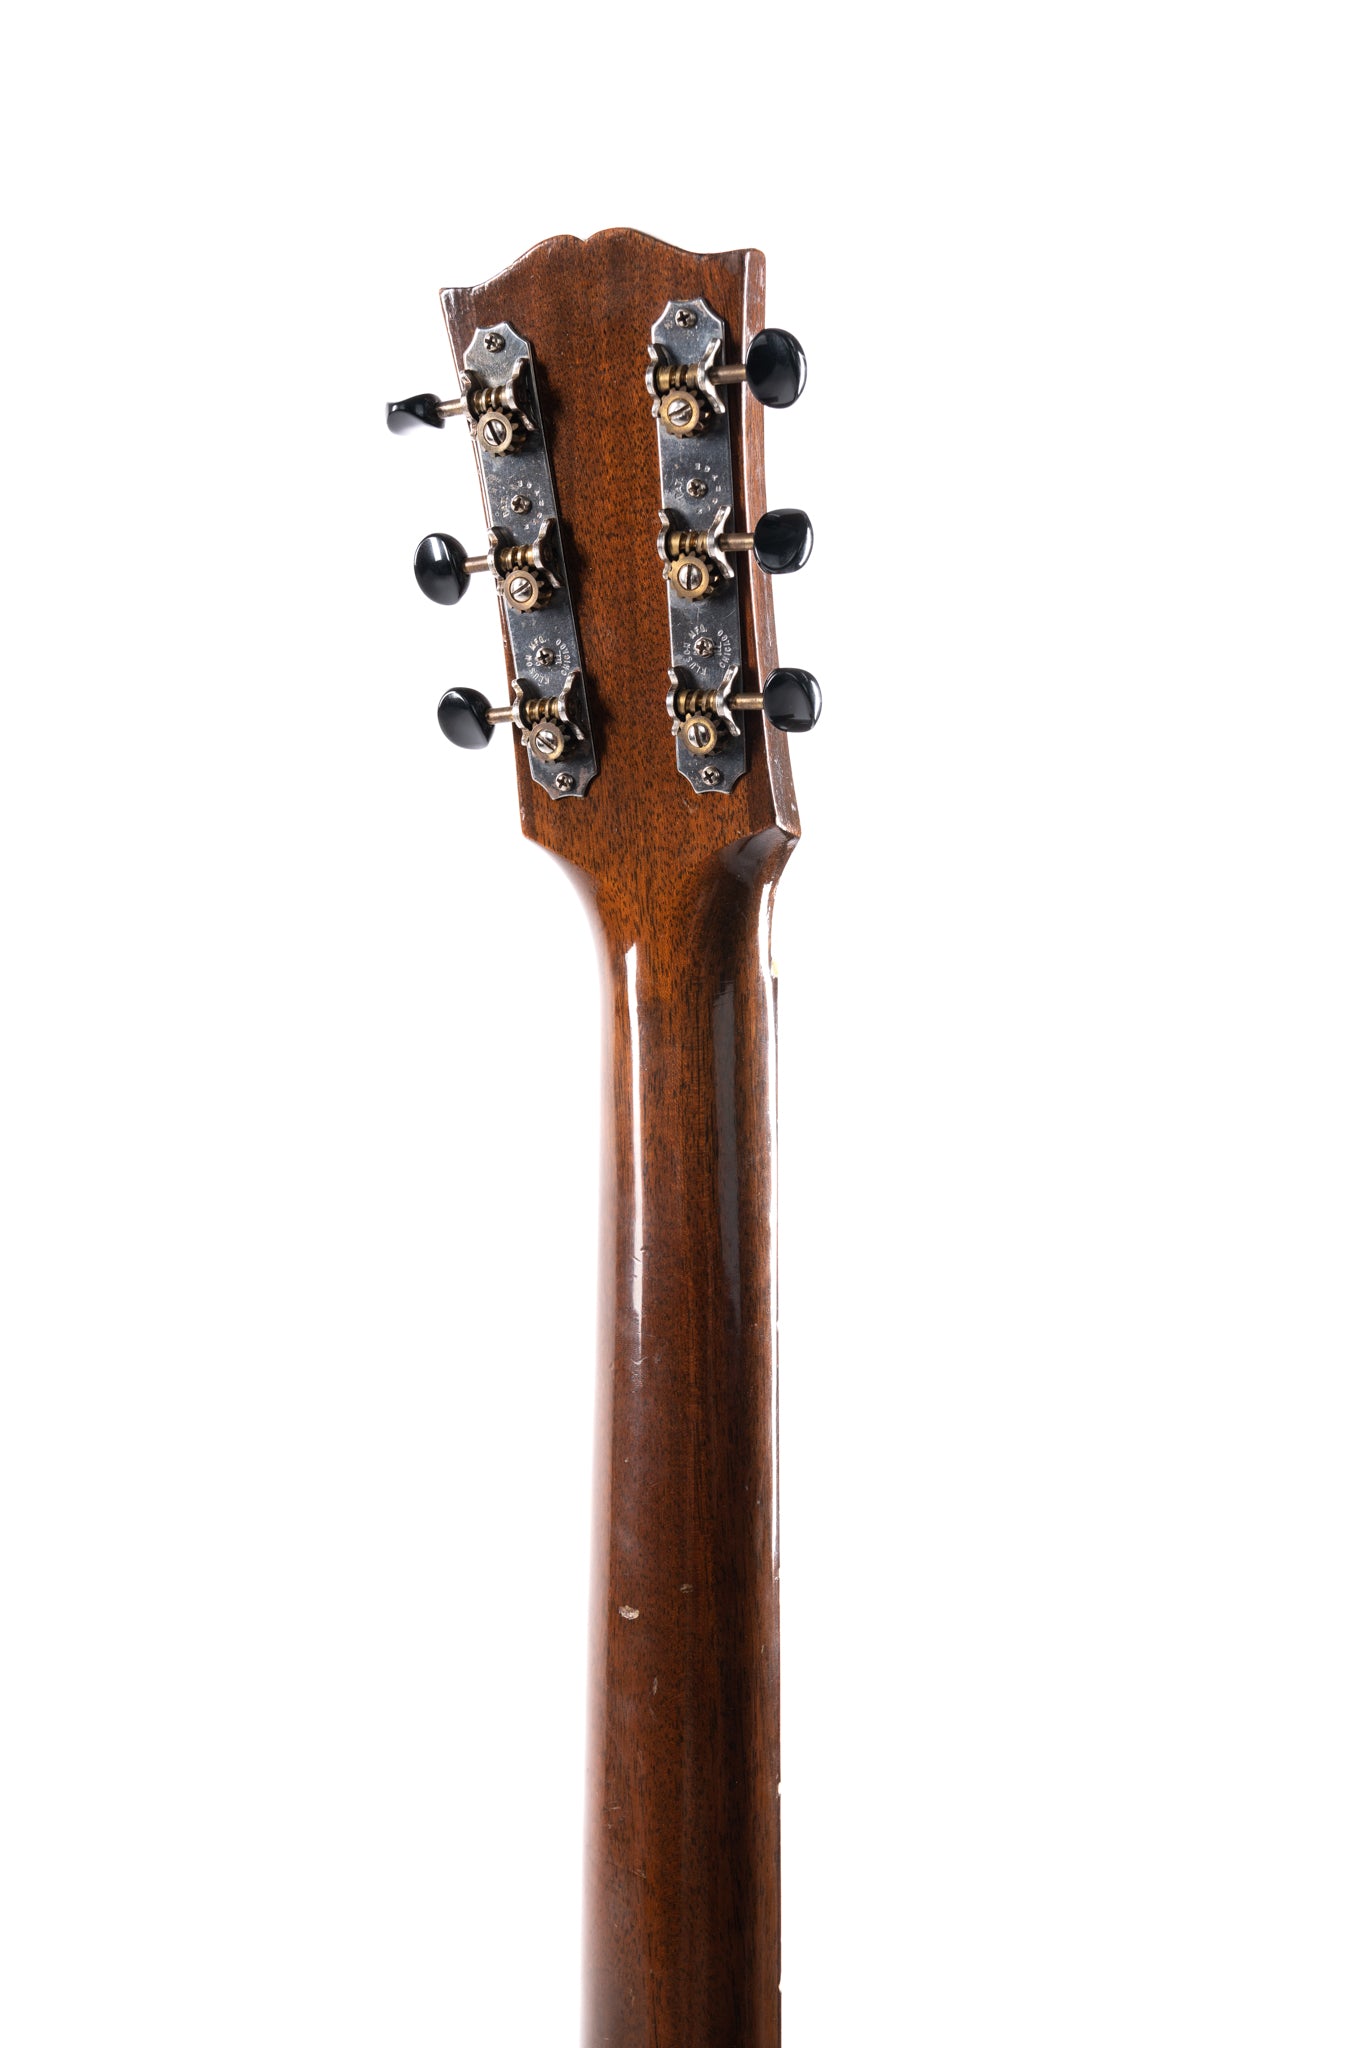 1942 Gibson J-45